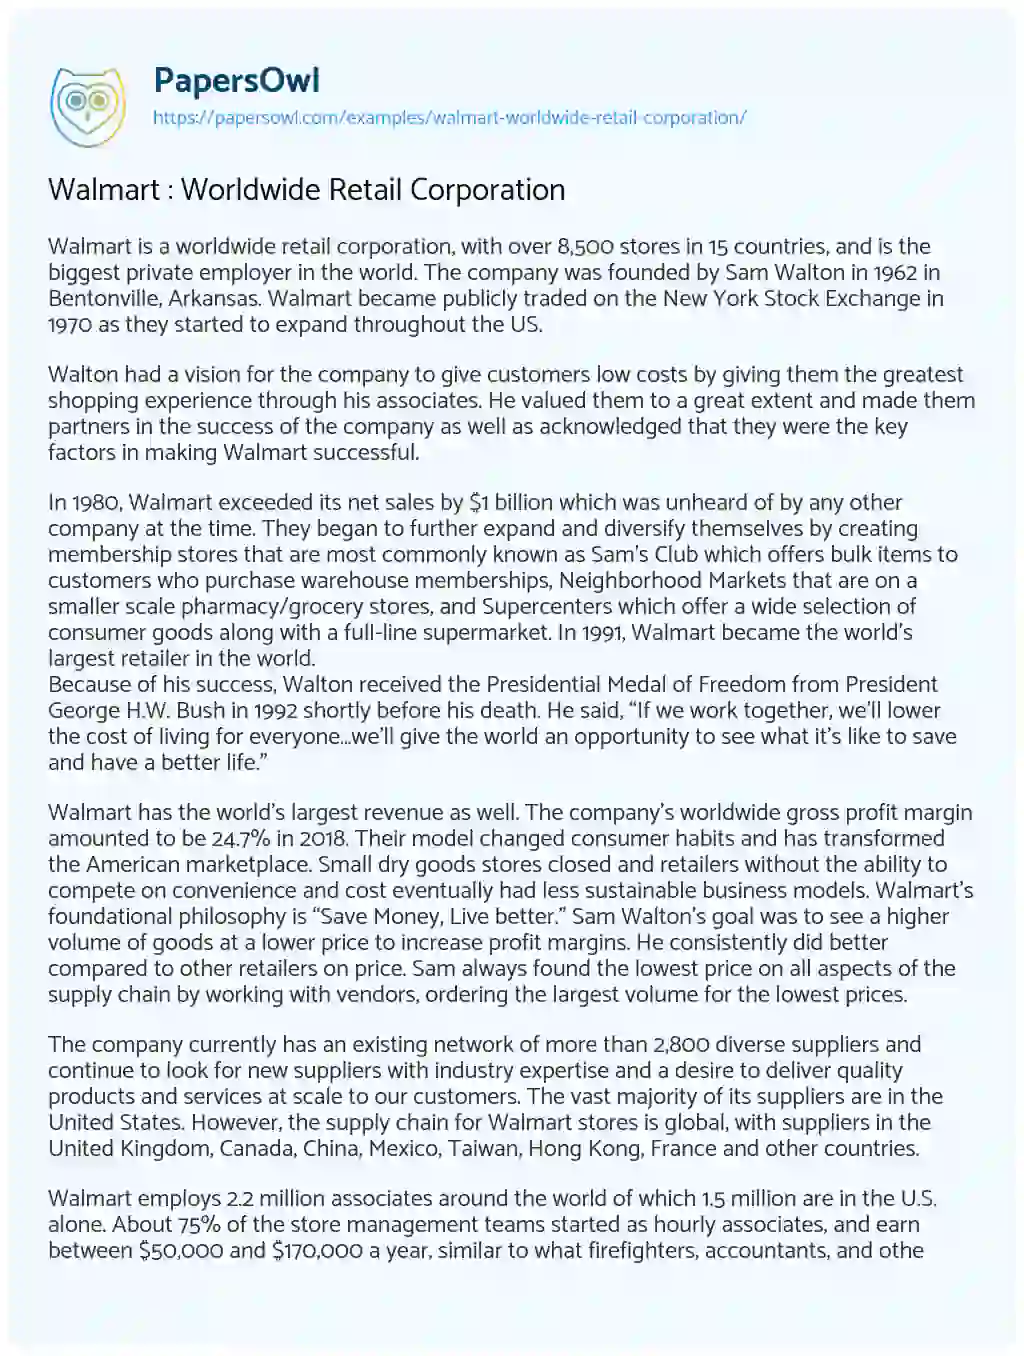 Essay on Walmart : Worldwide Retail Corporation